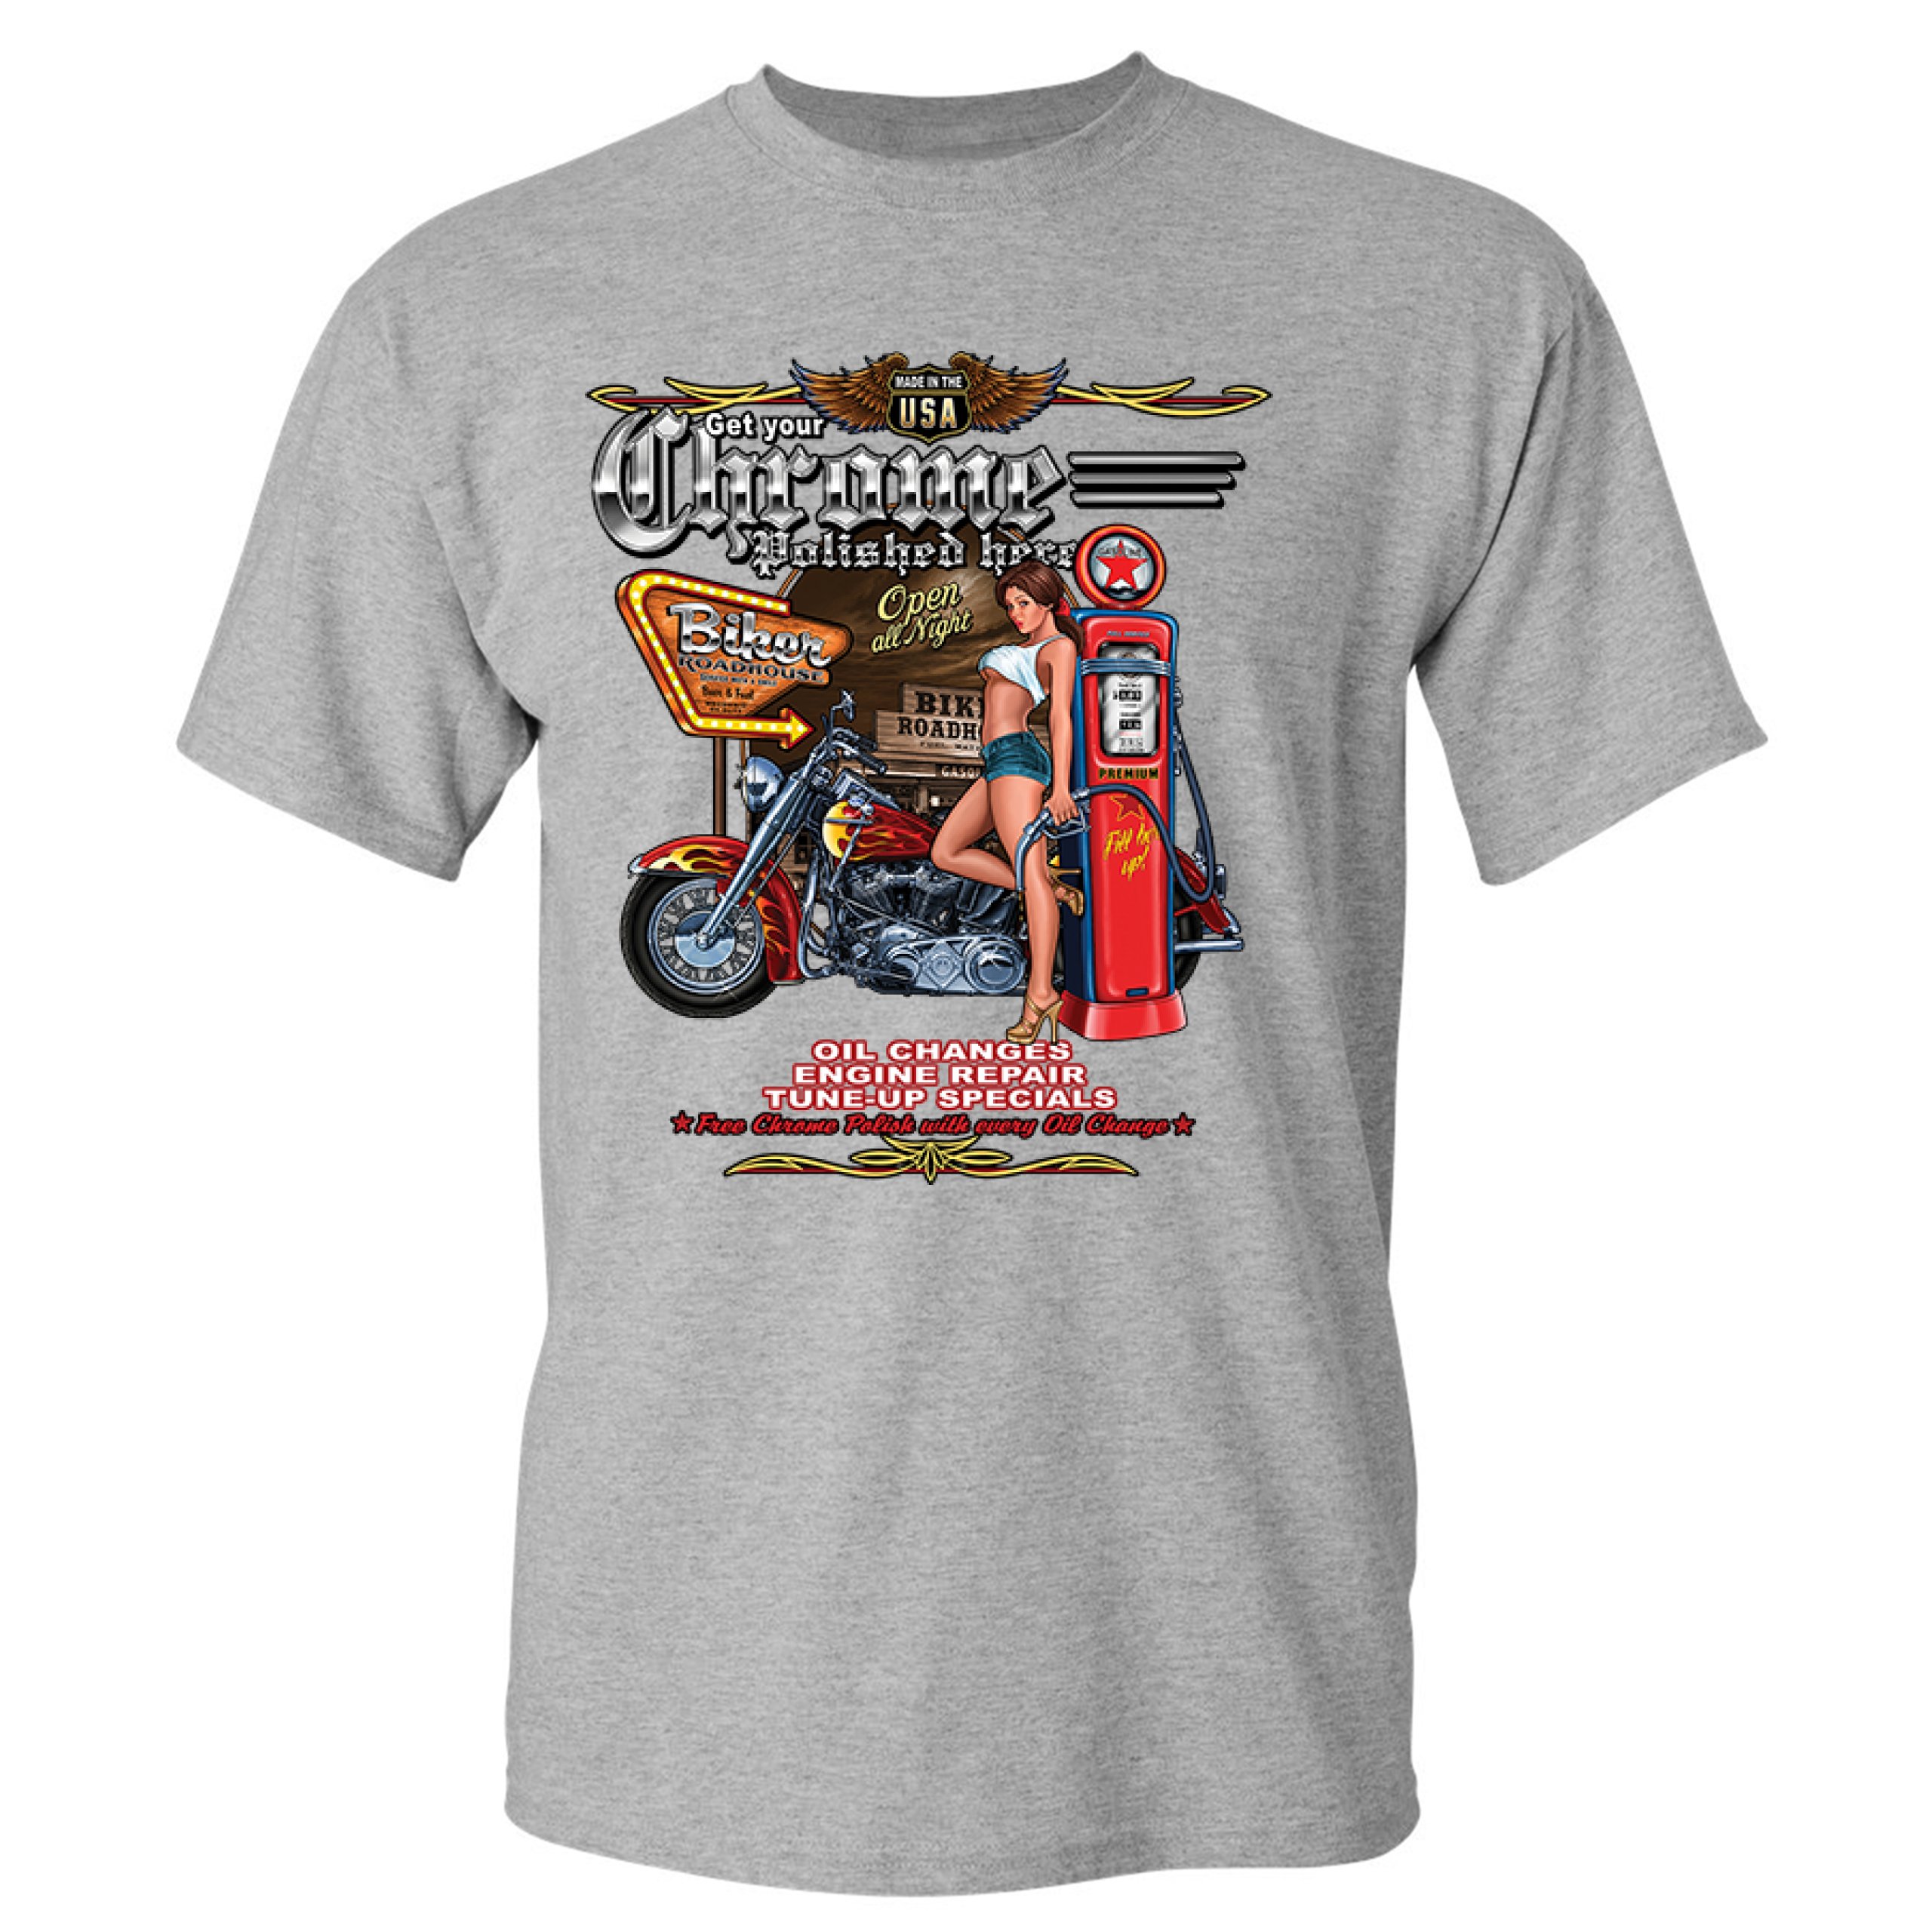 Get Your Chrome Polished Here T-shirt Pin Up Girl Biker Chopper Men's ...